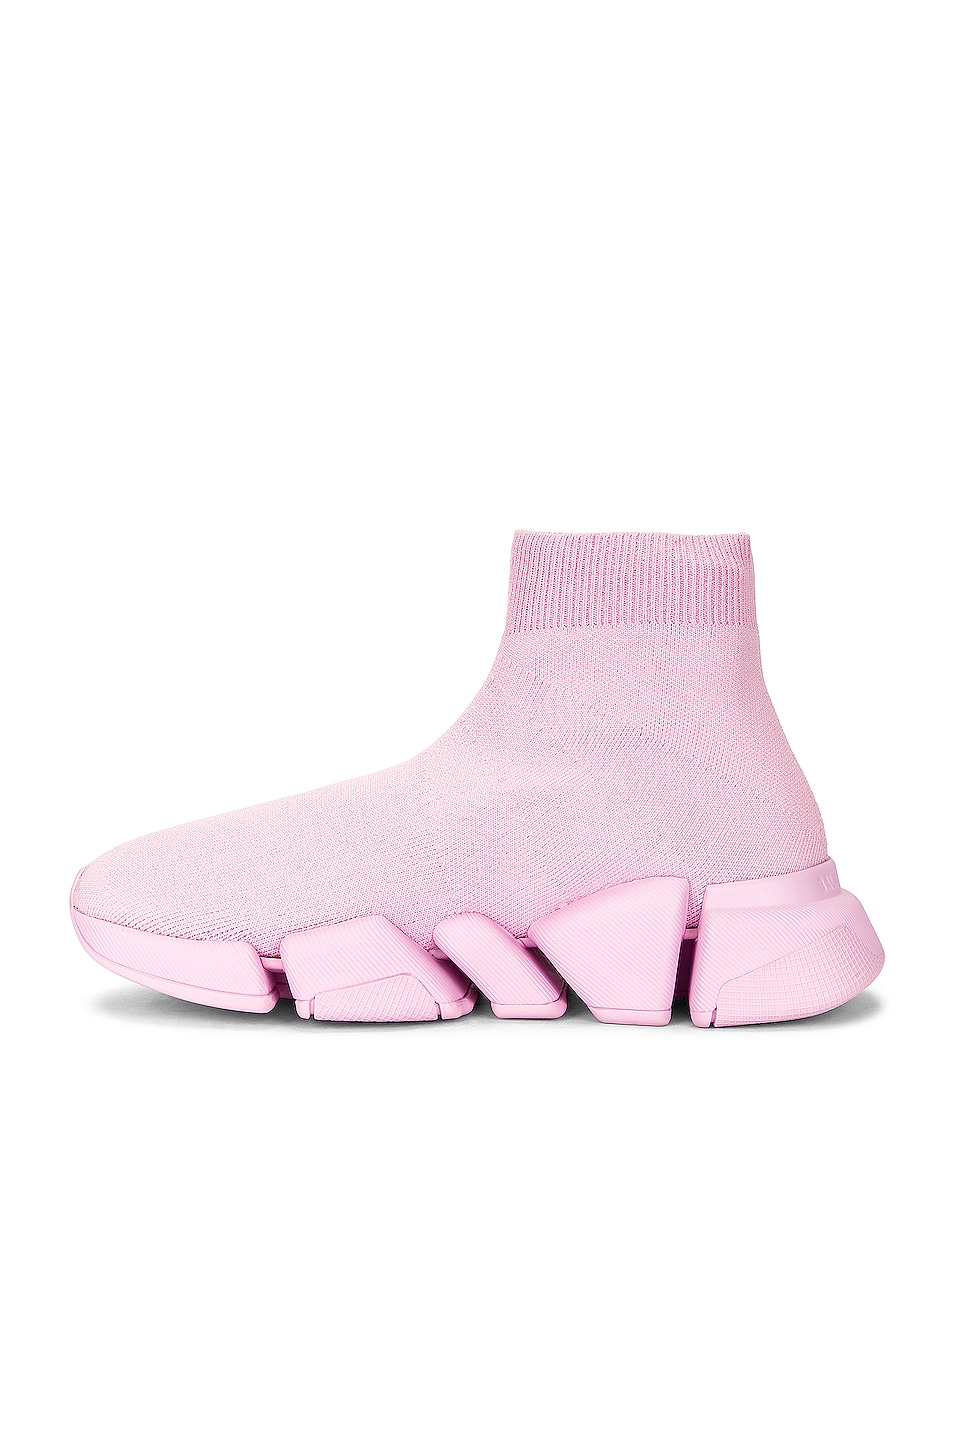 Balenciaga 2.0 Speed Sneakers in Light Pink | FWRD